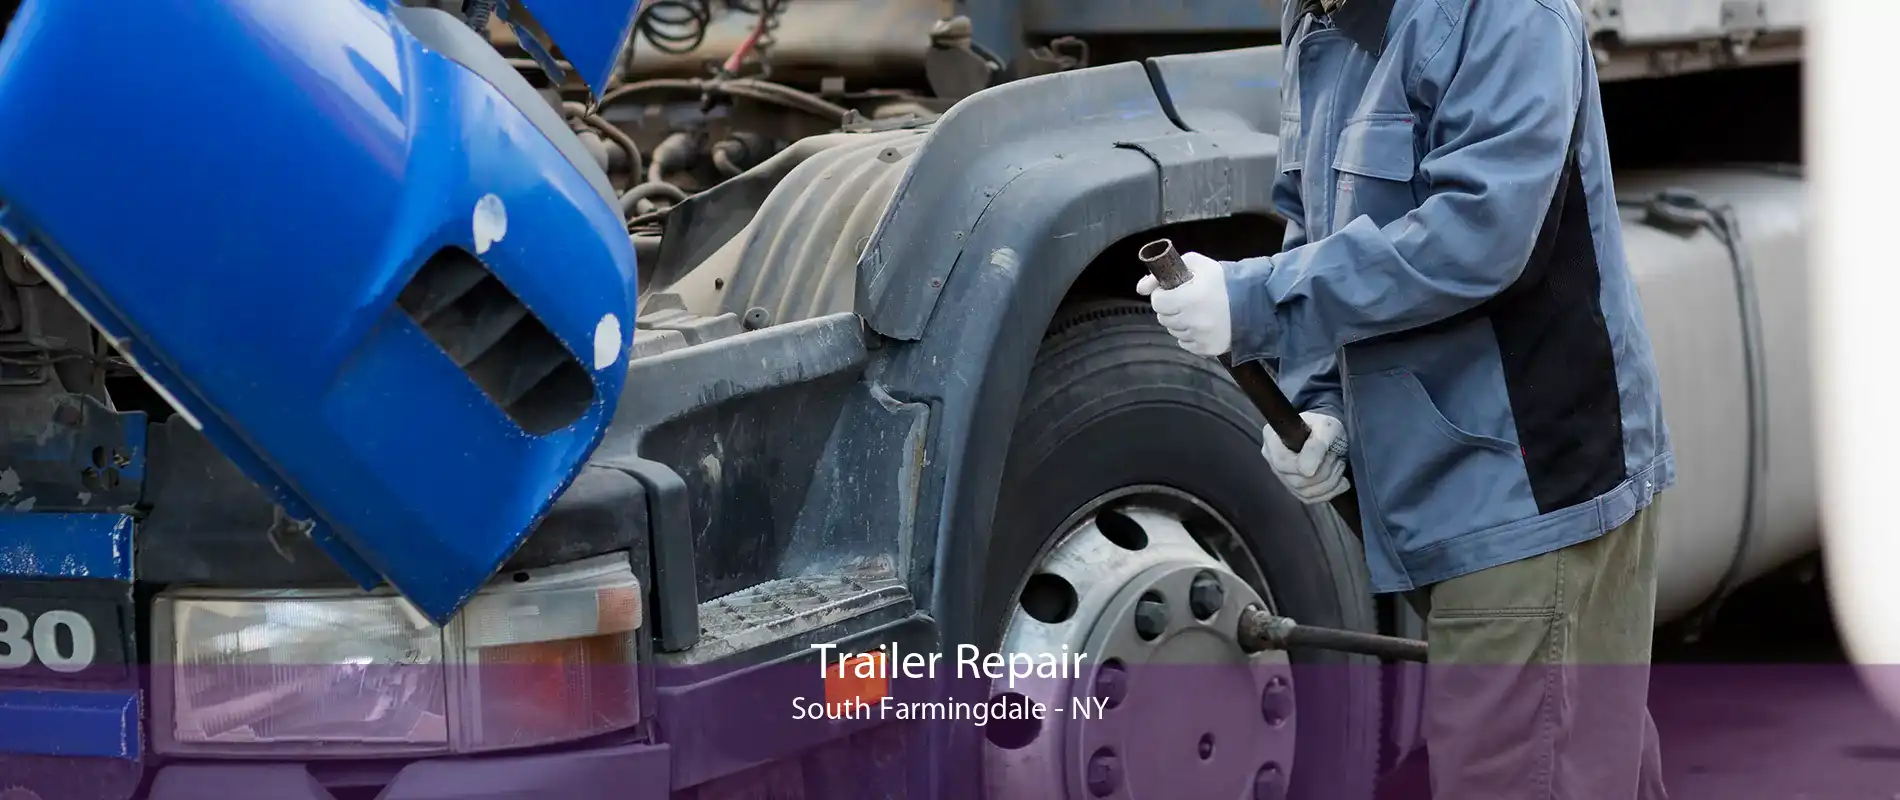 Trailer Repair South Farmingdale - NY